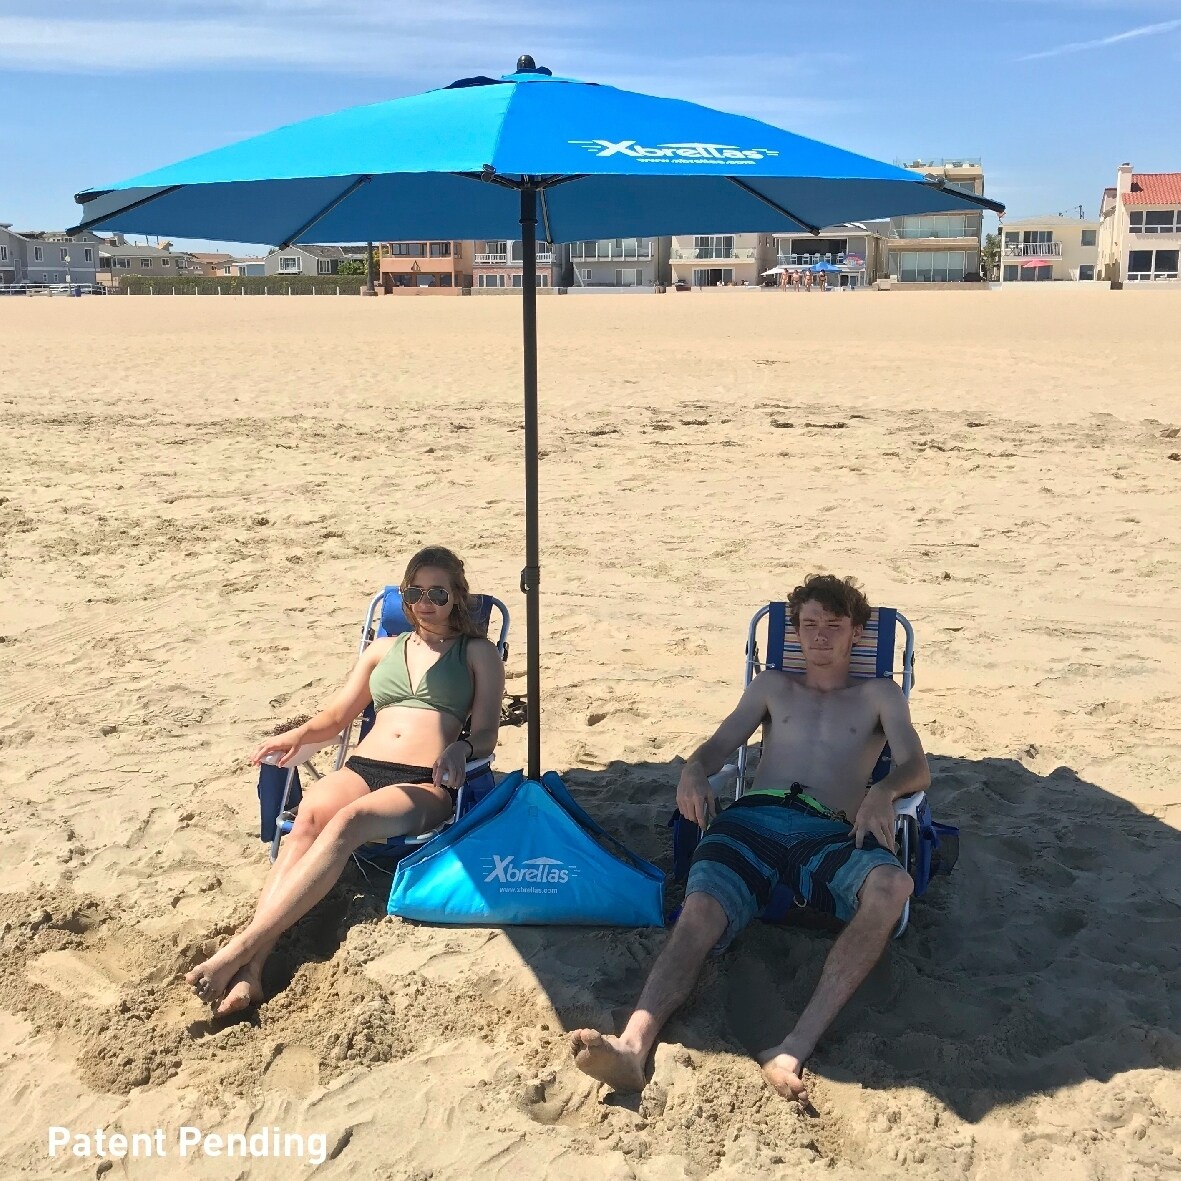 best wind resistant beach umbrella